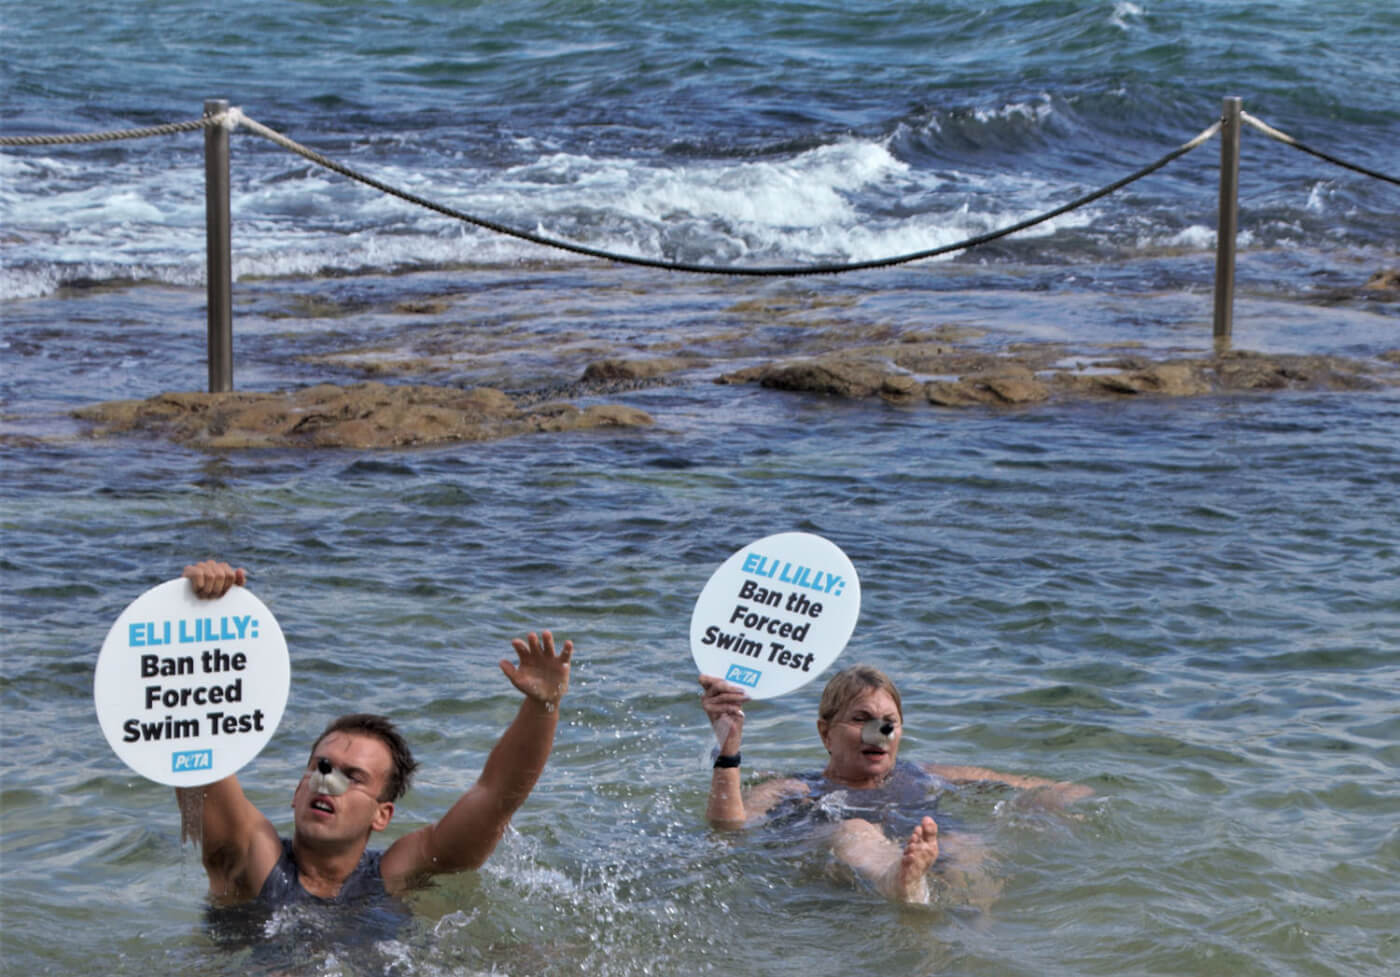 two PETA activists dressed as mice splash about at Bondi Beach